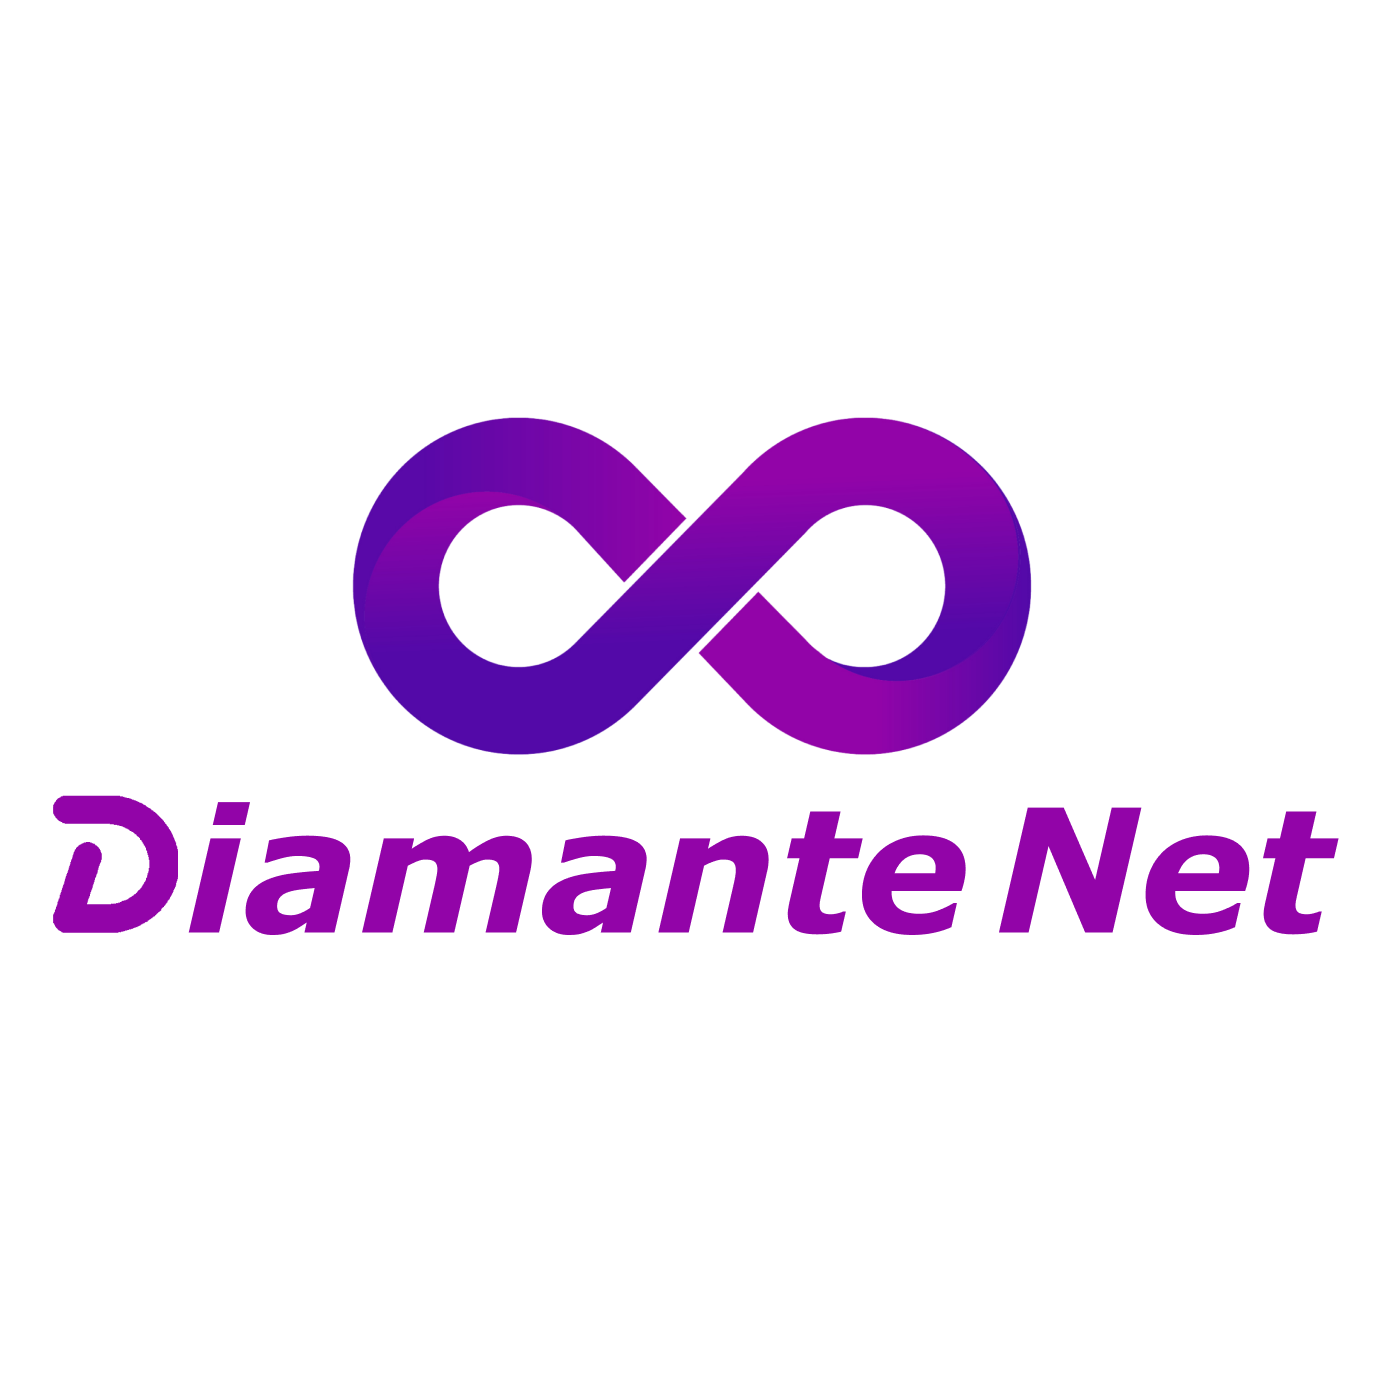 Diamante Net logo